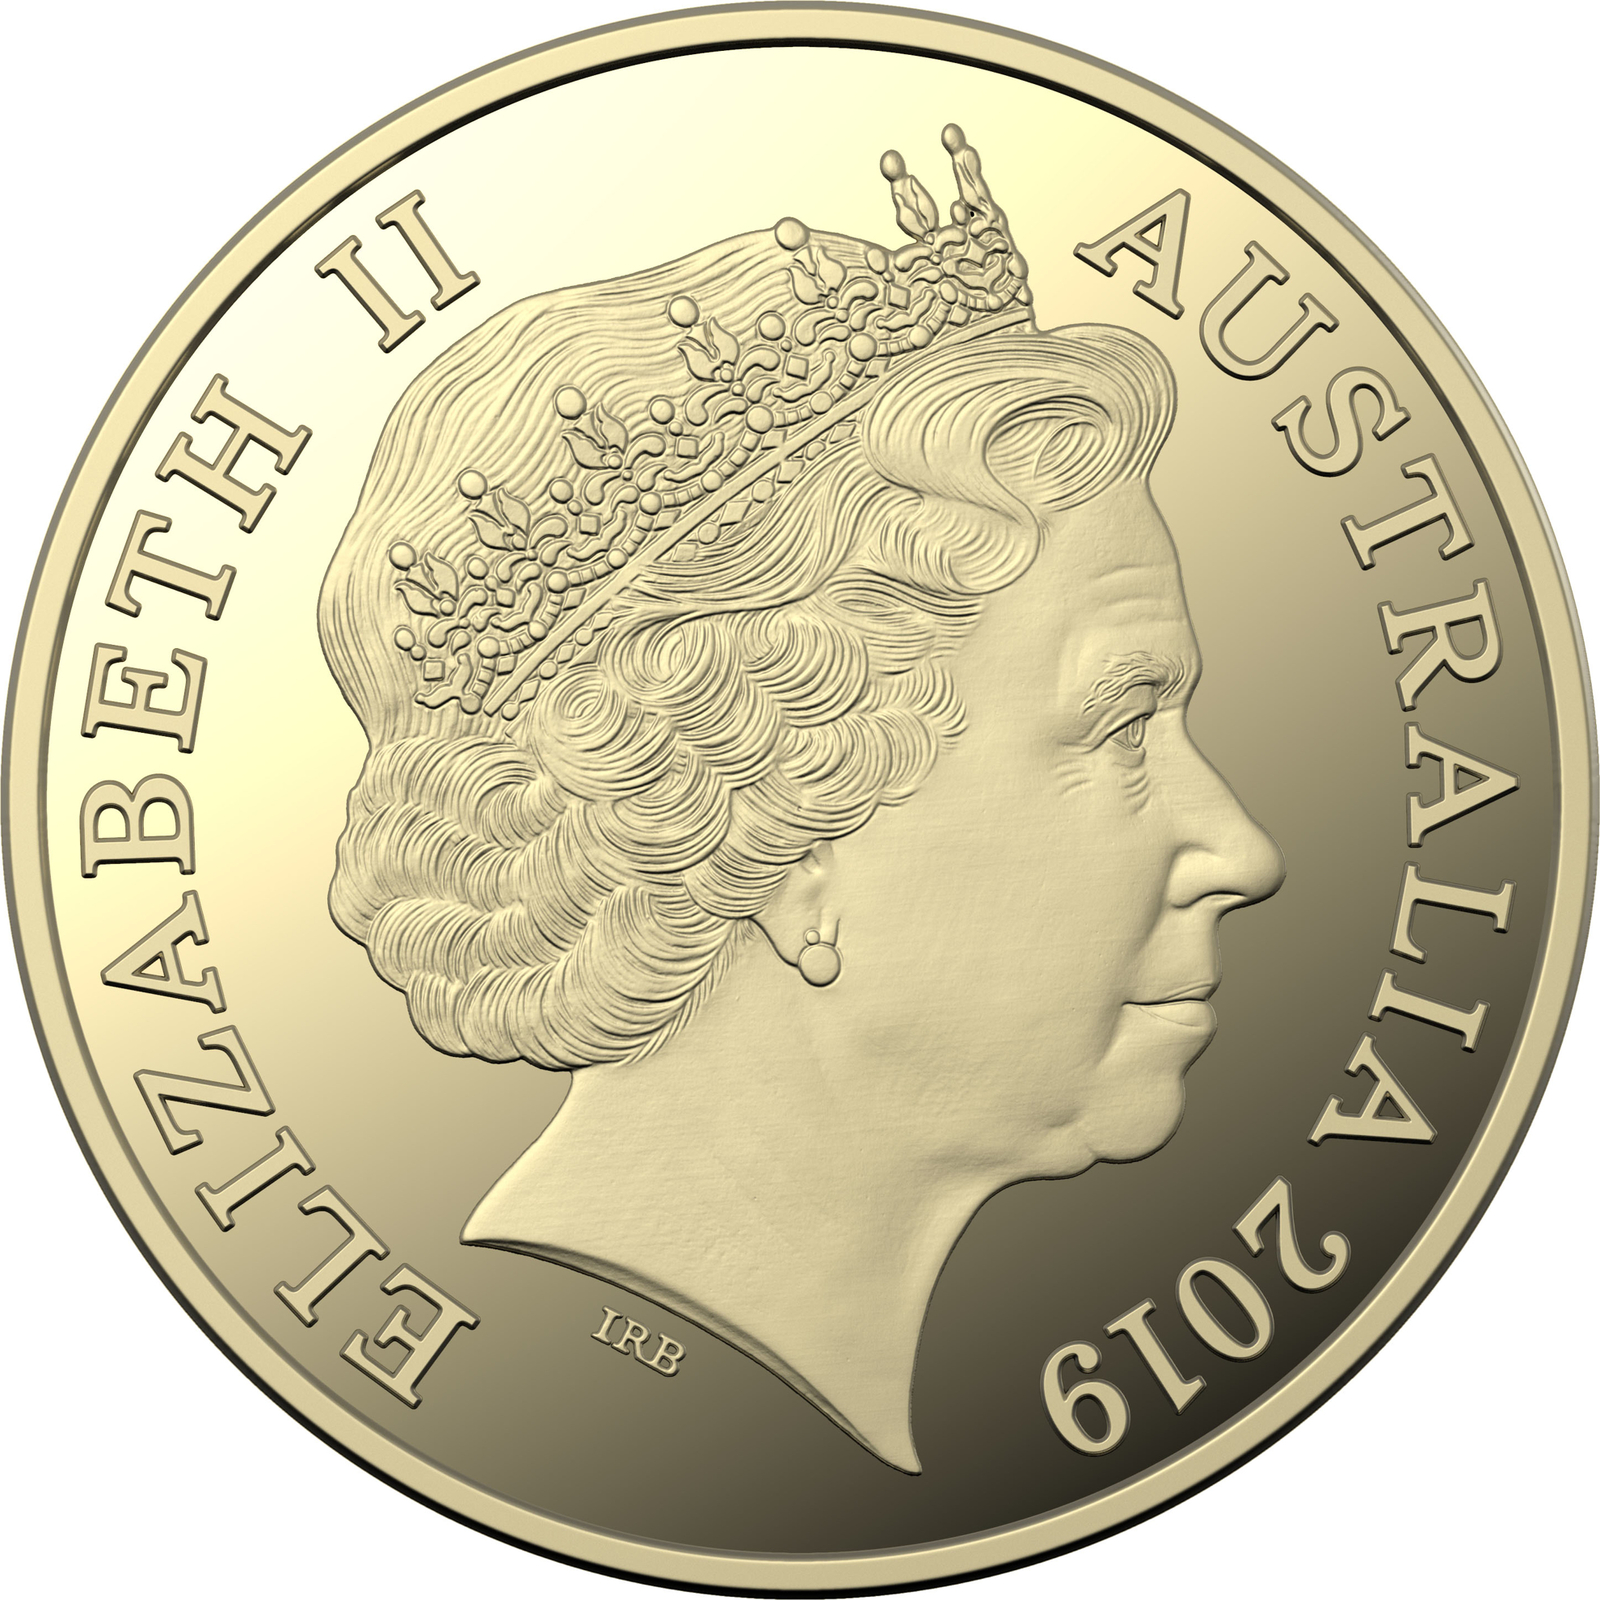 2019 $1 "E" Great Australian Coin Hunt